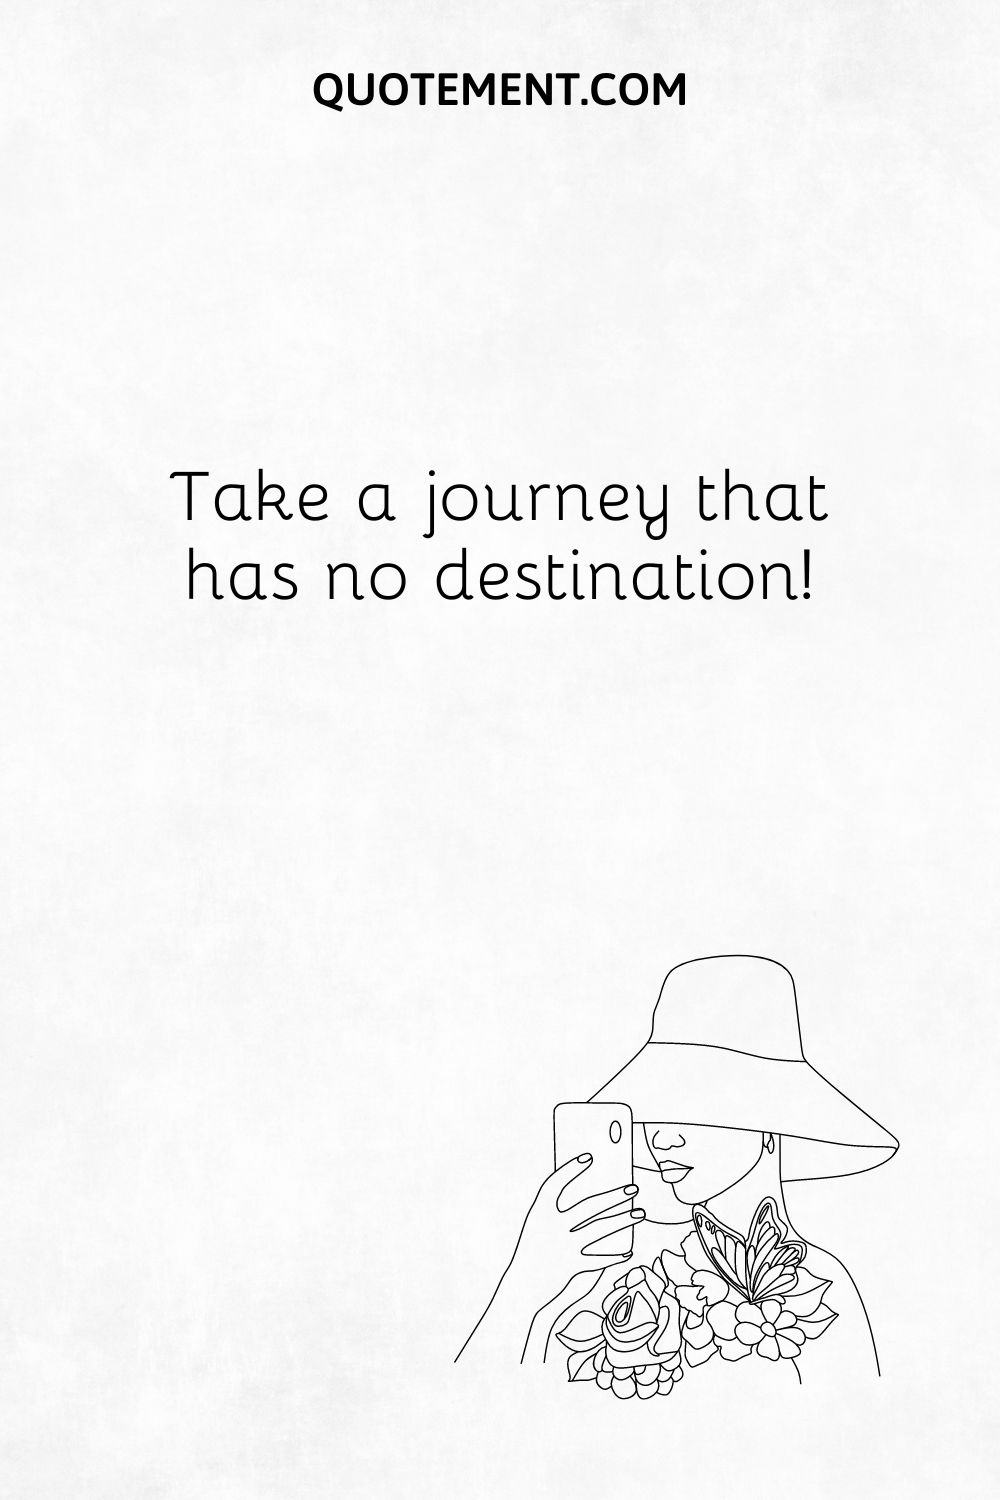 Take a journey that has no destination!